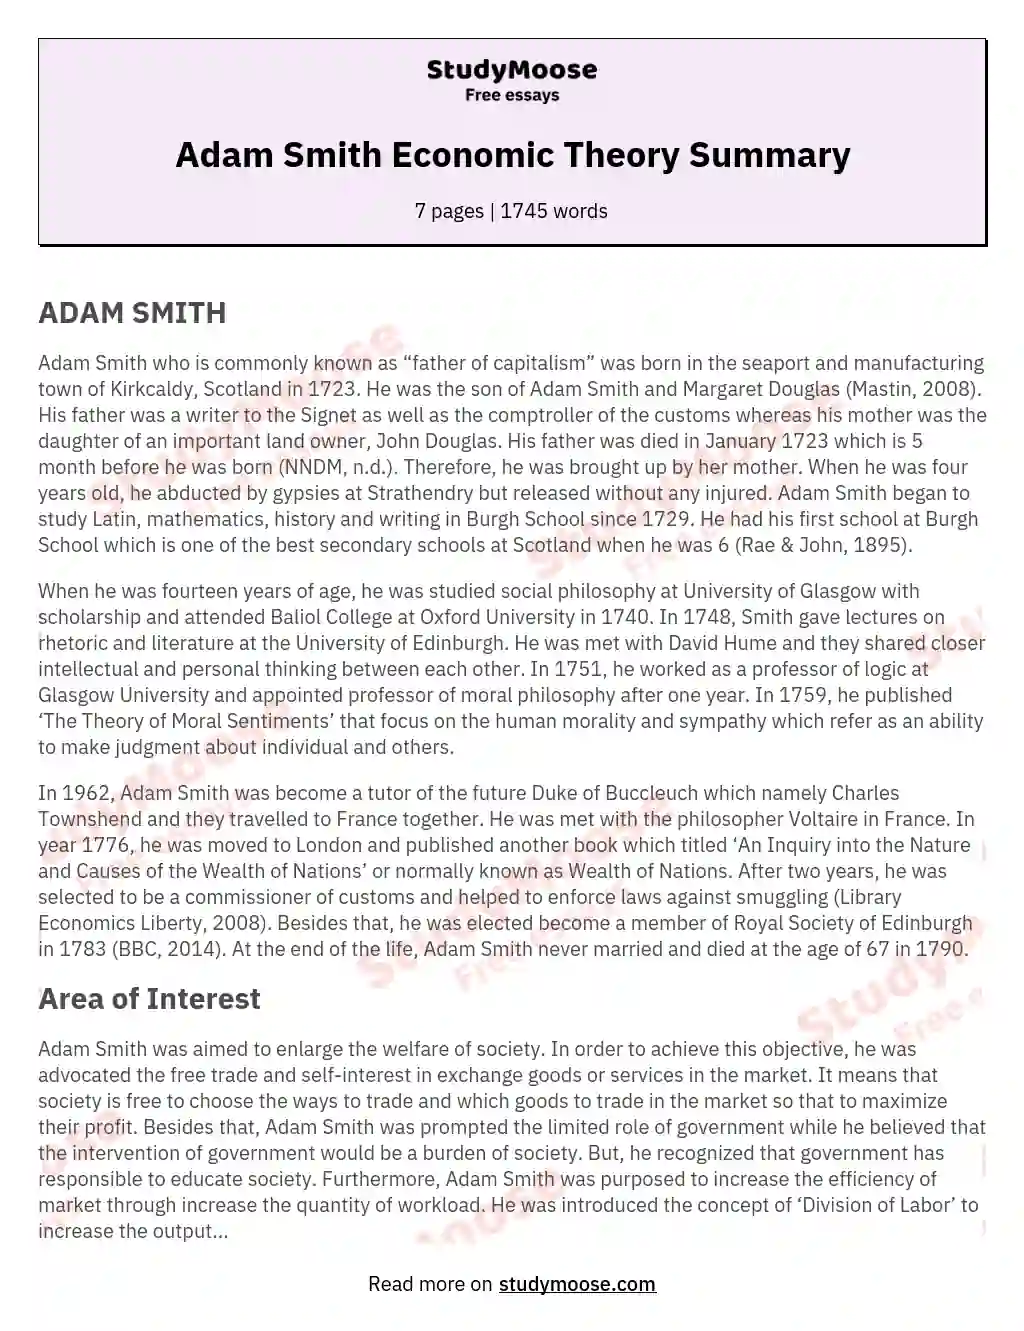 Adam Smith Economic Theory Summary essay